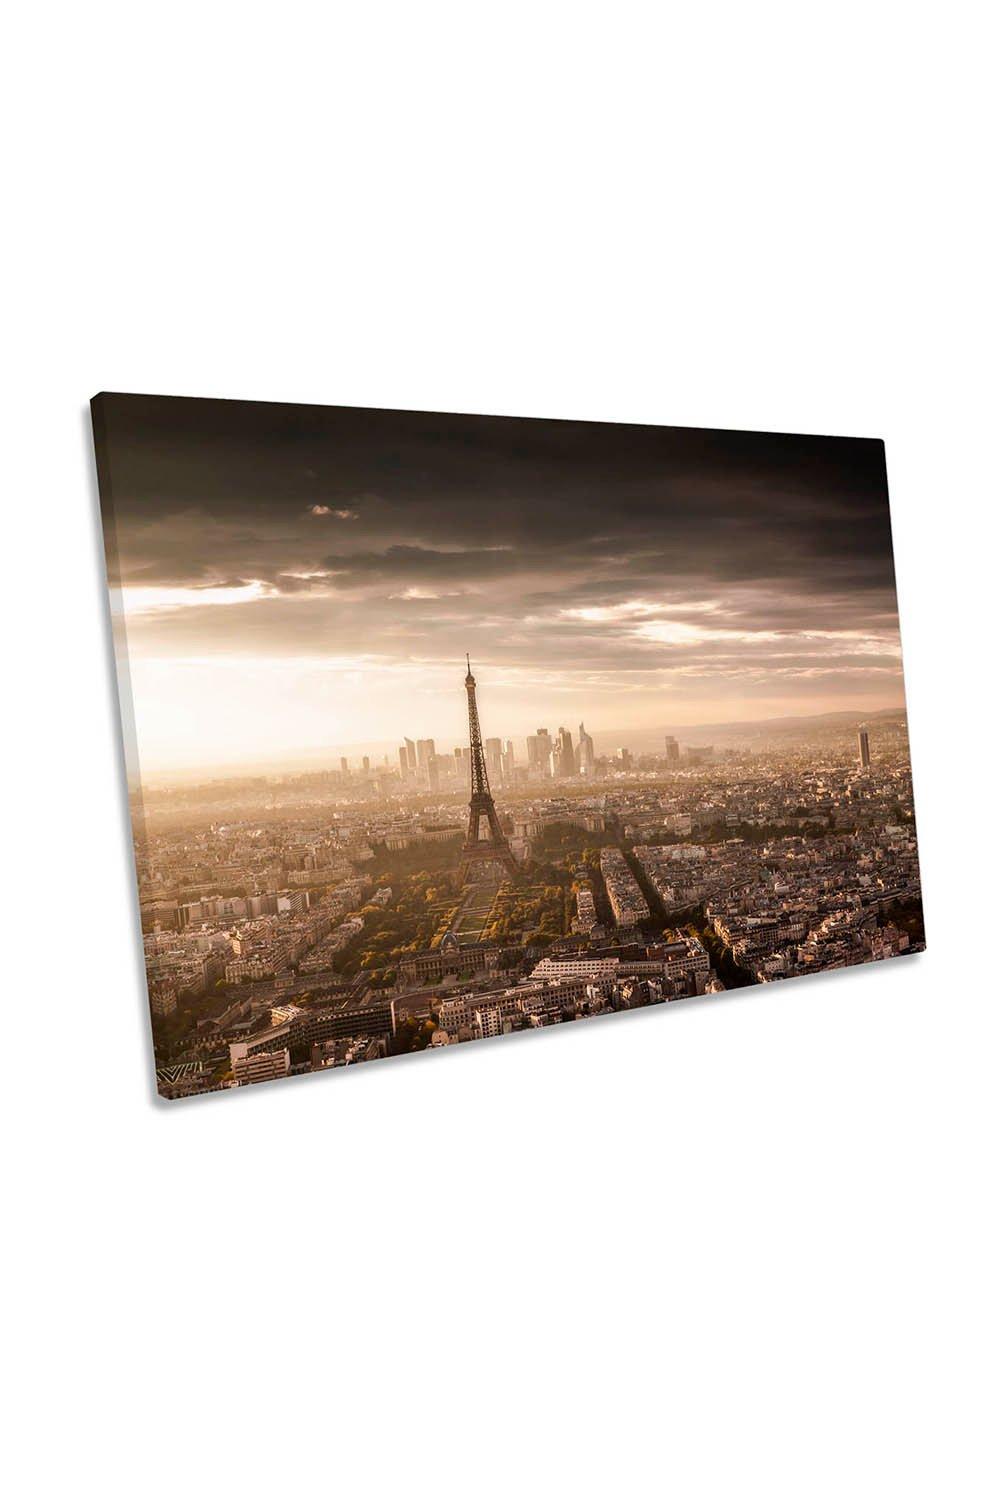 Paris Magnificence Sunset City Canvas Wall Art Picture Print